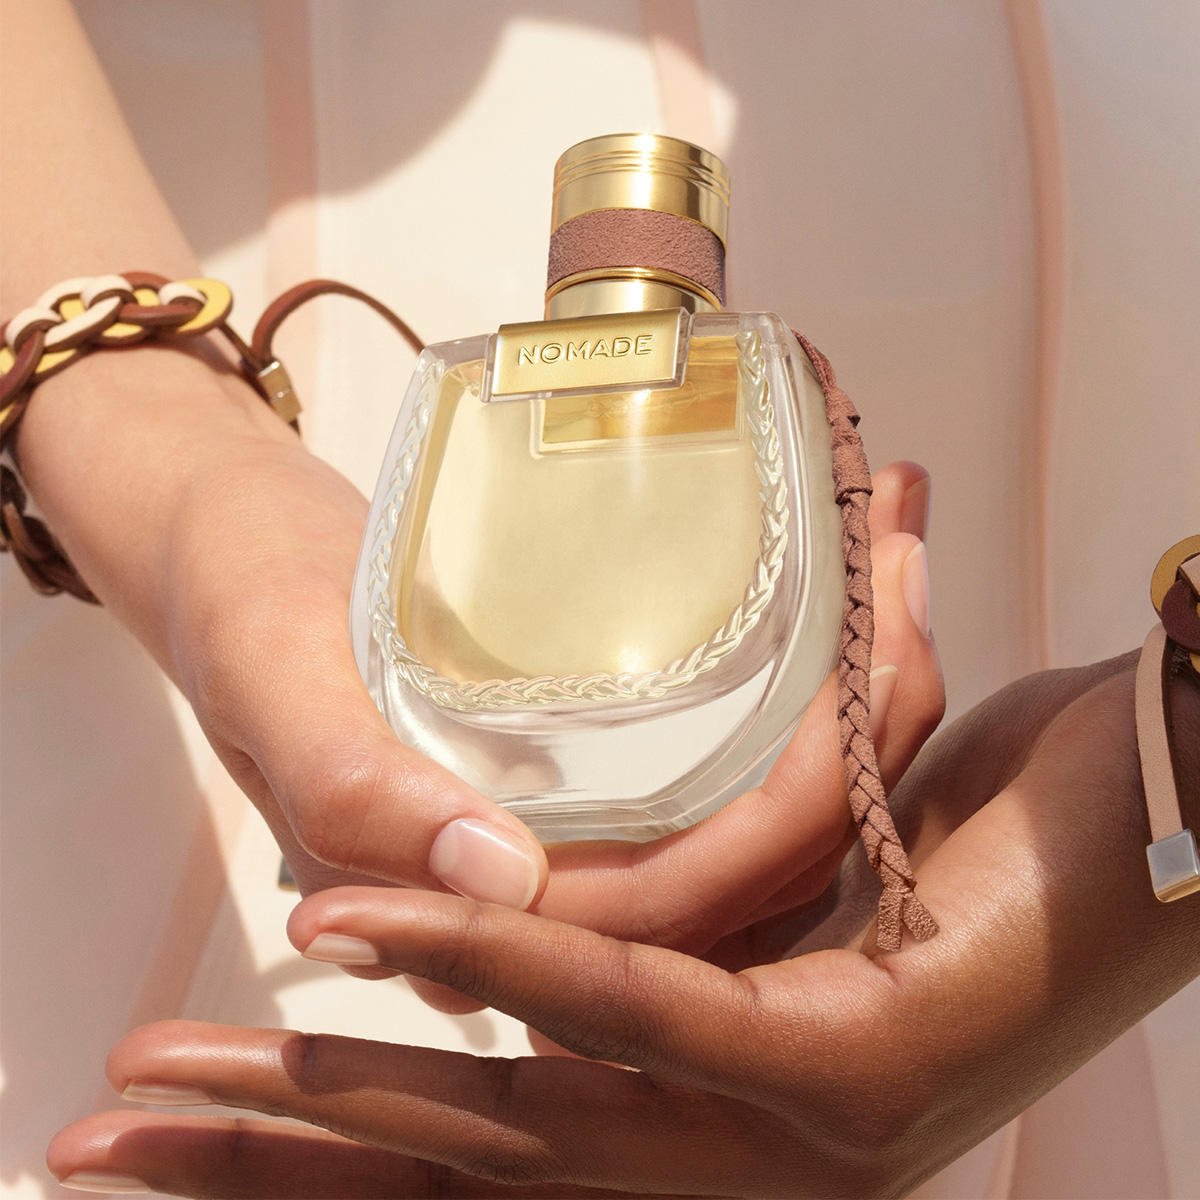 Chloe Nomade EDP Body Lotion Set | My Perfume Shop Australia